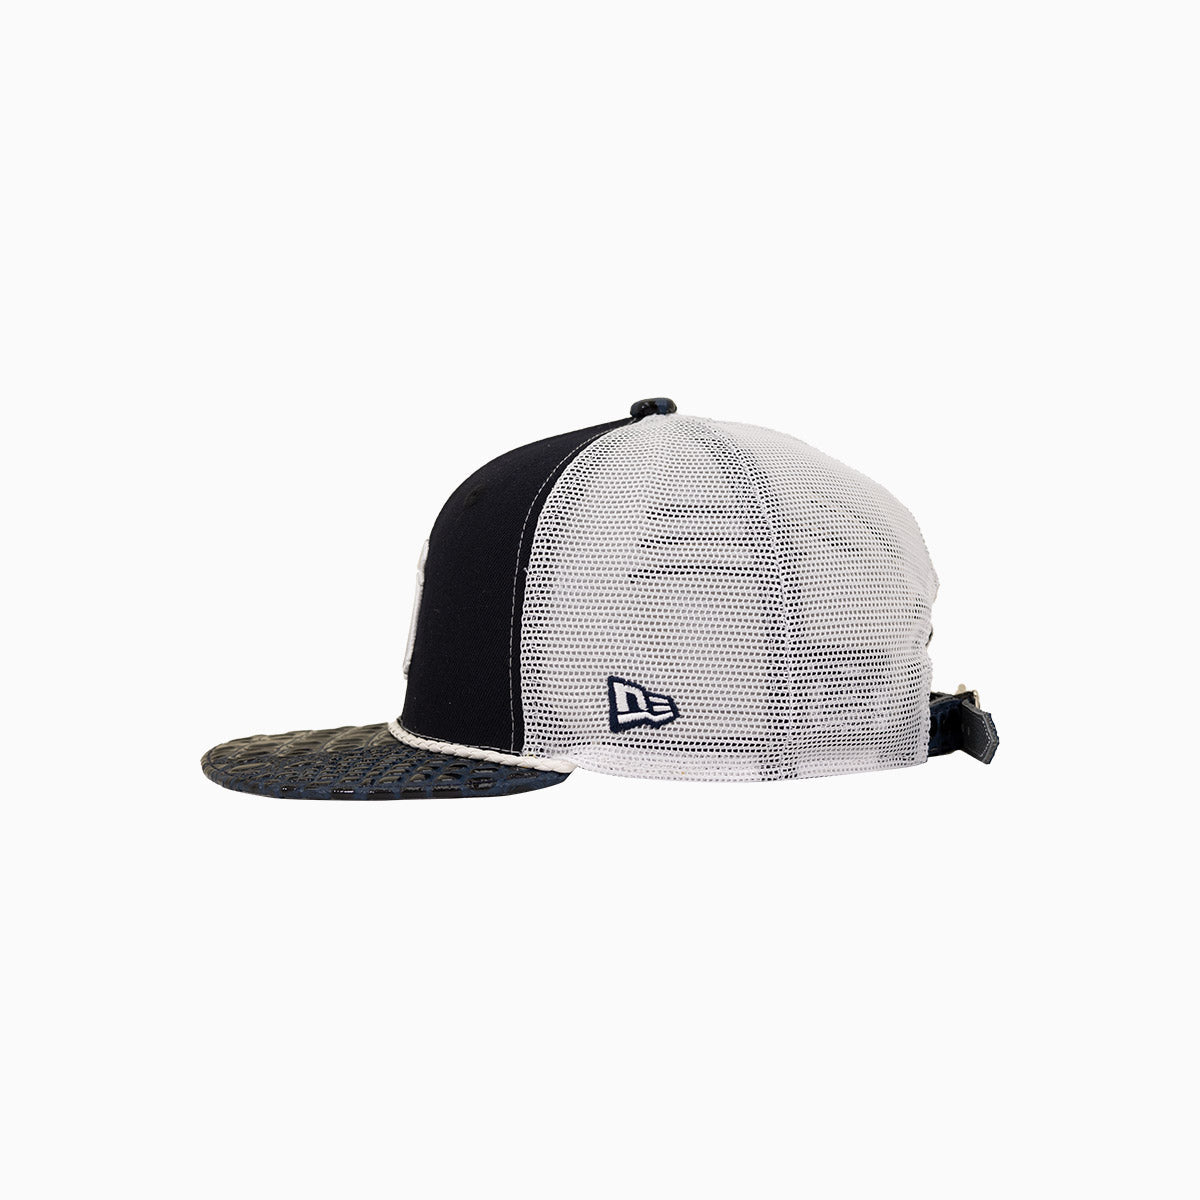 Breyer's Buck 50 New York Yankees Trucker Hat With Leather Visor